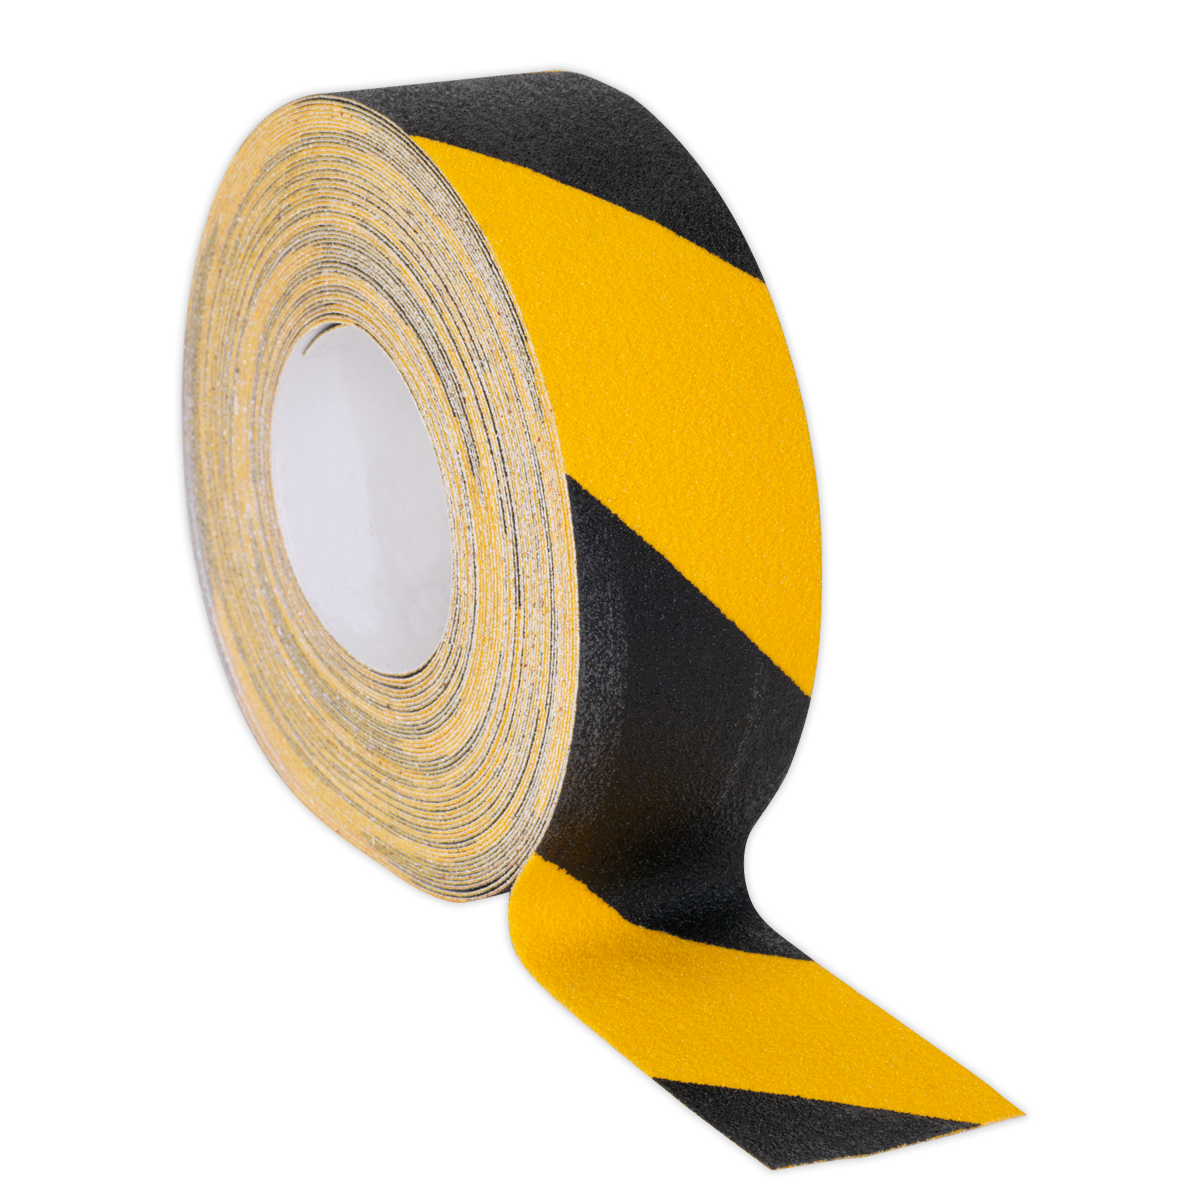 Sealey Anti-Slip Tape Self-Adhesive Black Yellow 50mm x 18m